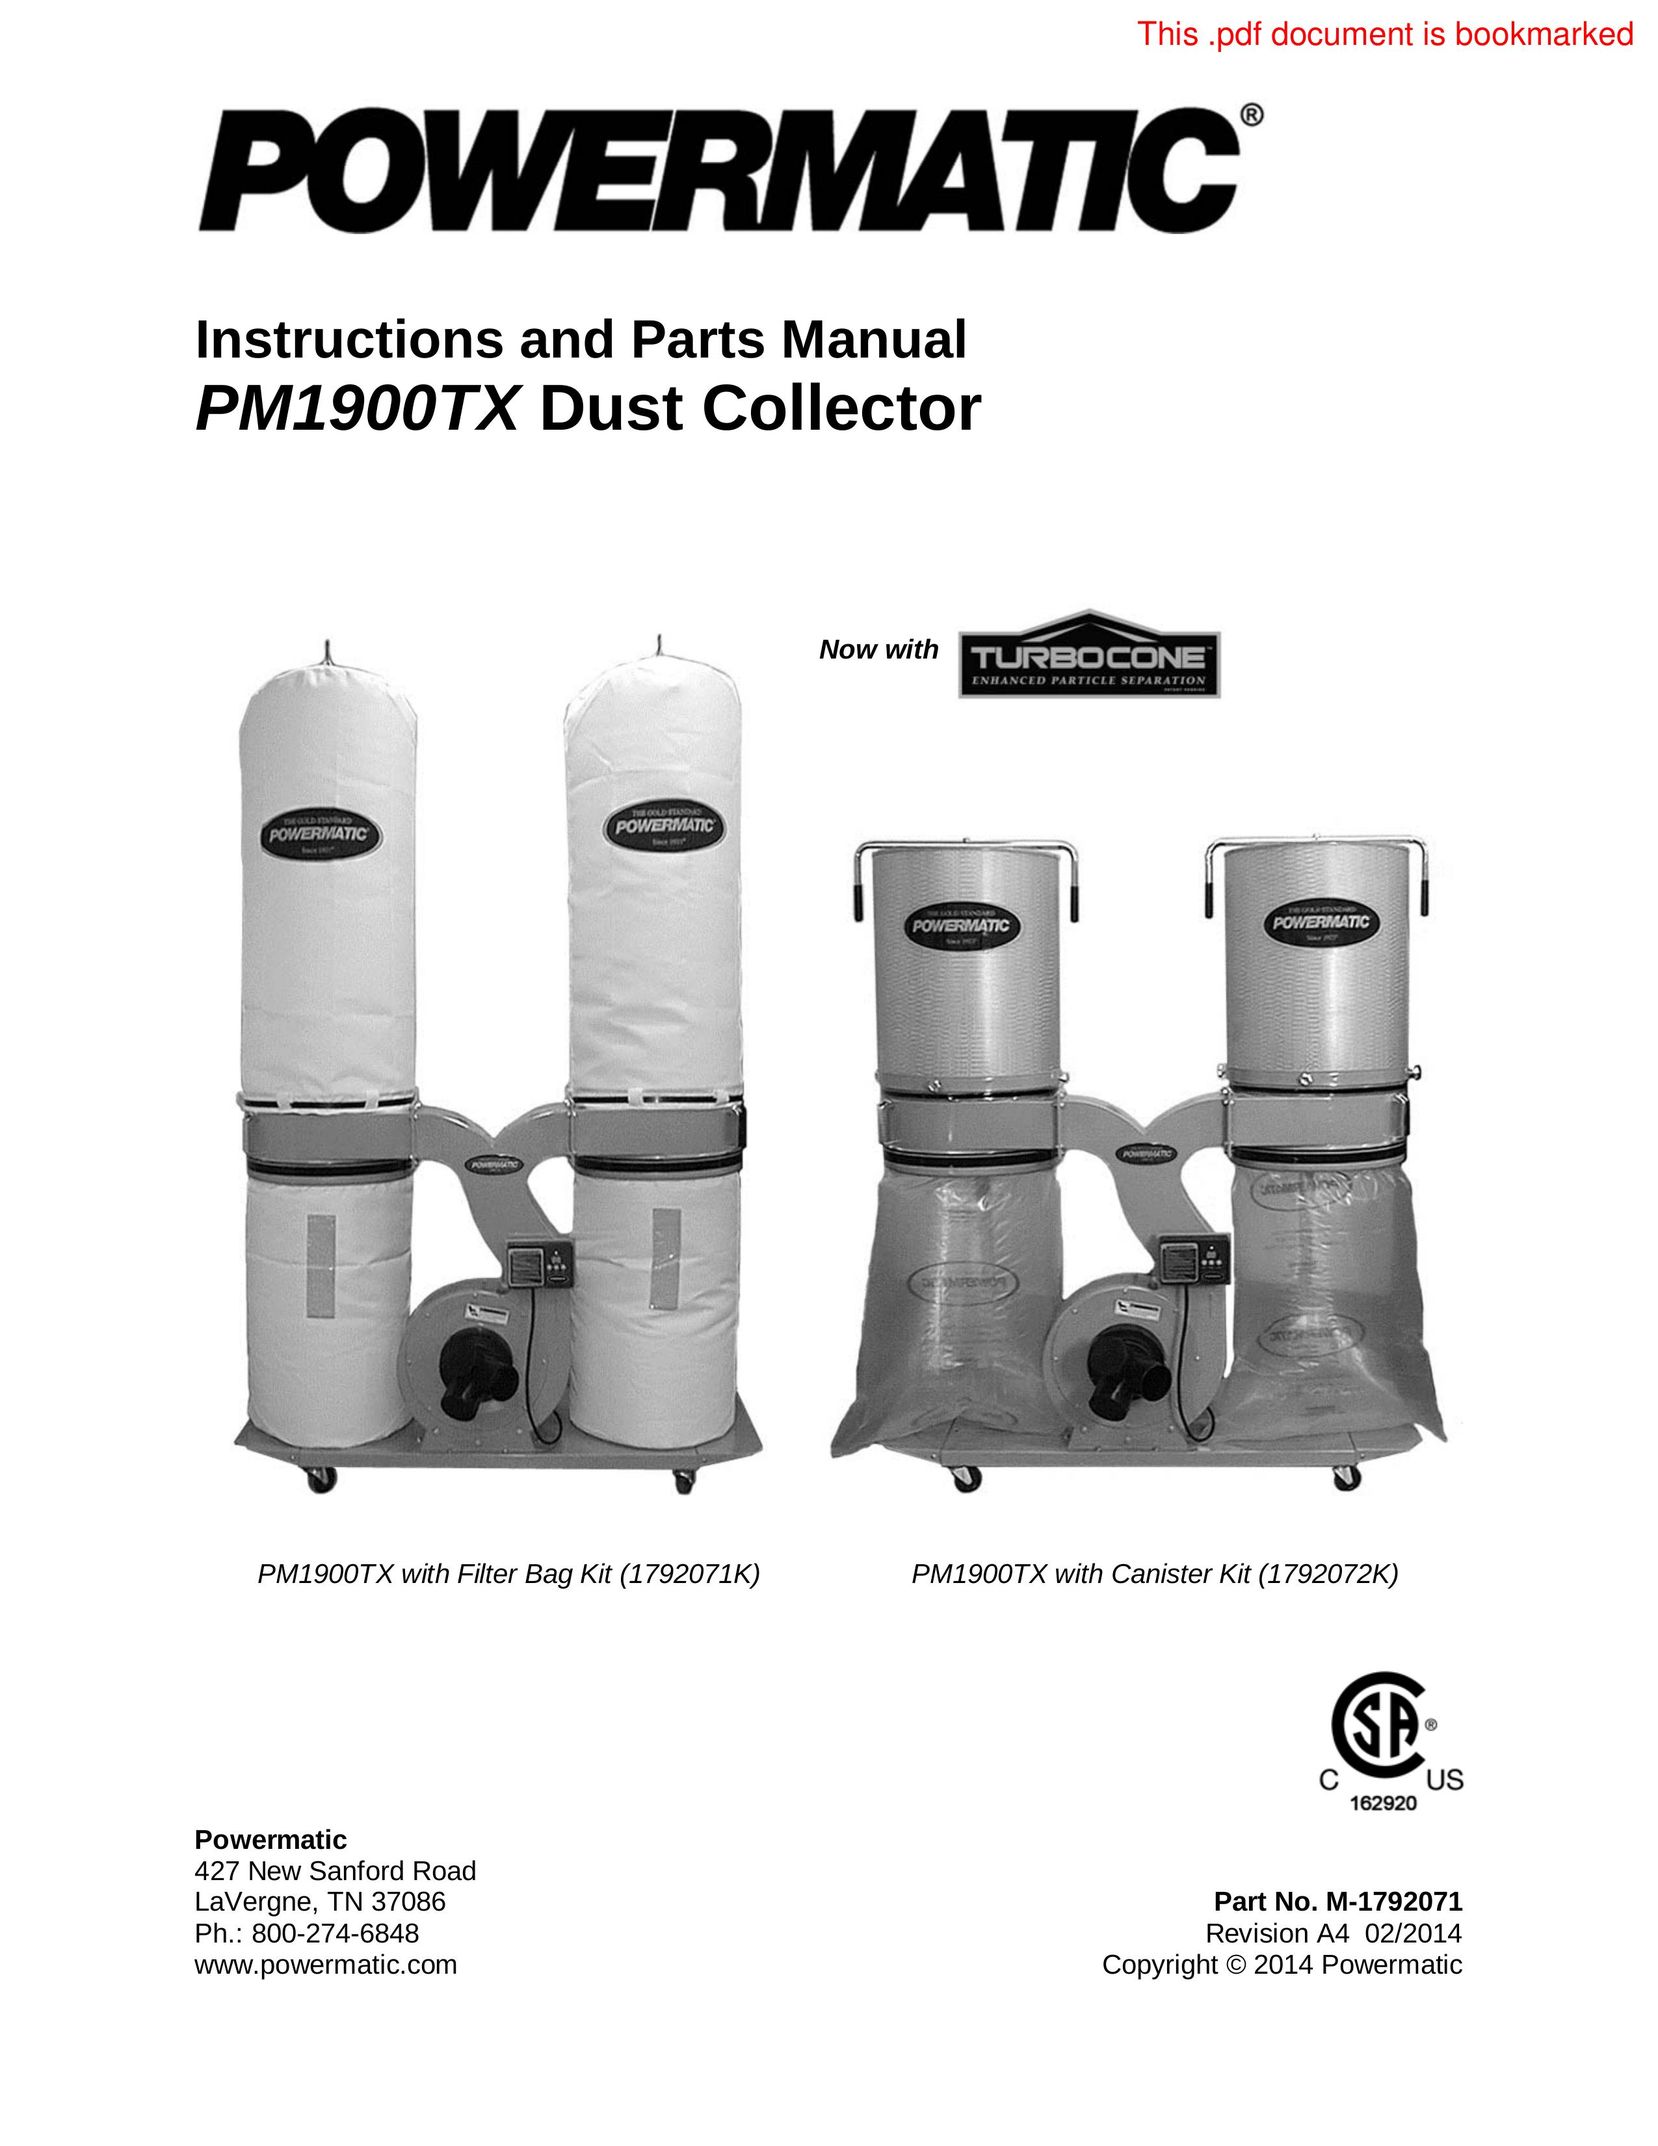 Powermatic PM1900TX Dust Collector User Manual